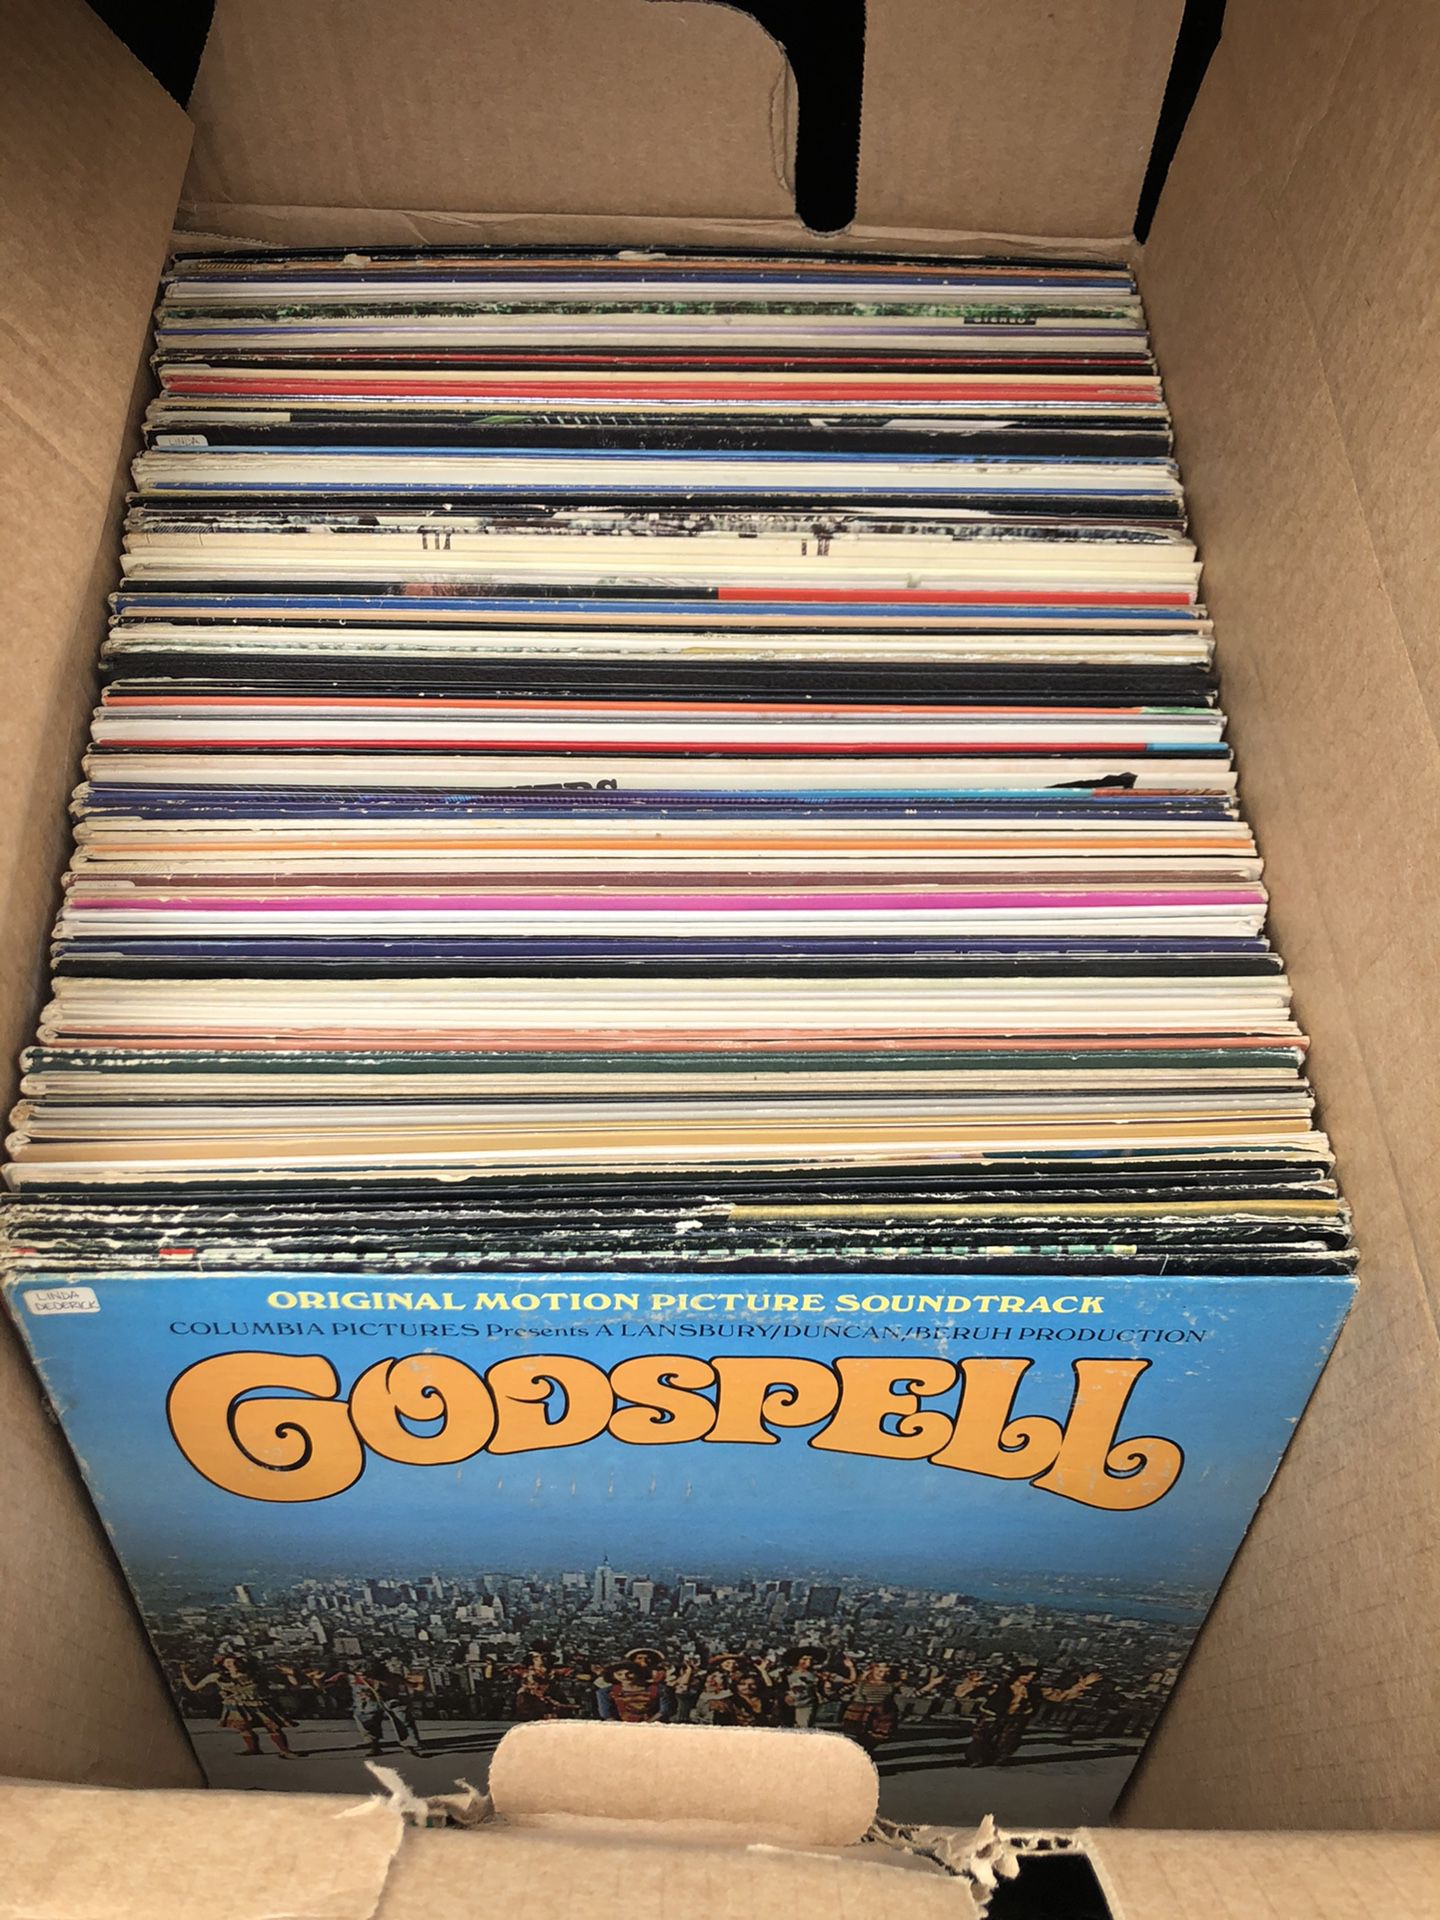 120+ LP’s / Records / Vinyl / Albums - Very good condition - $5 each